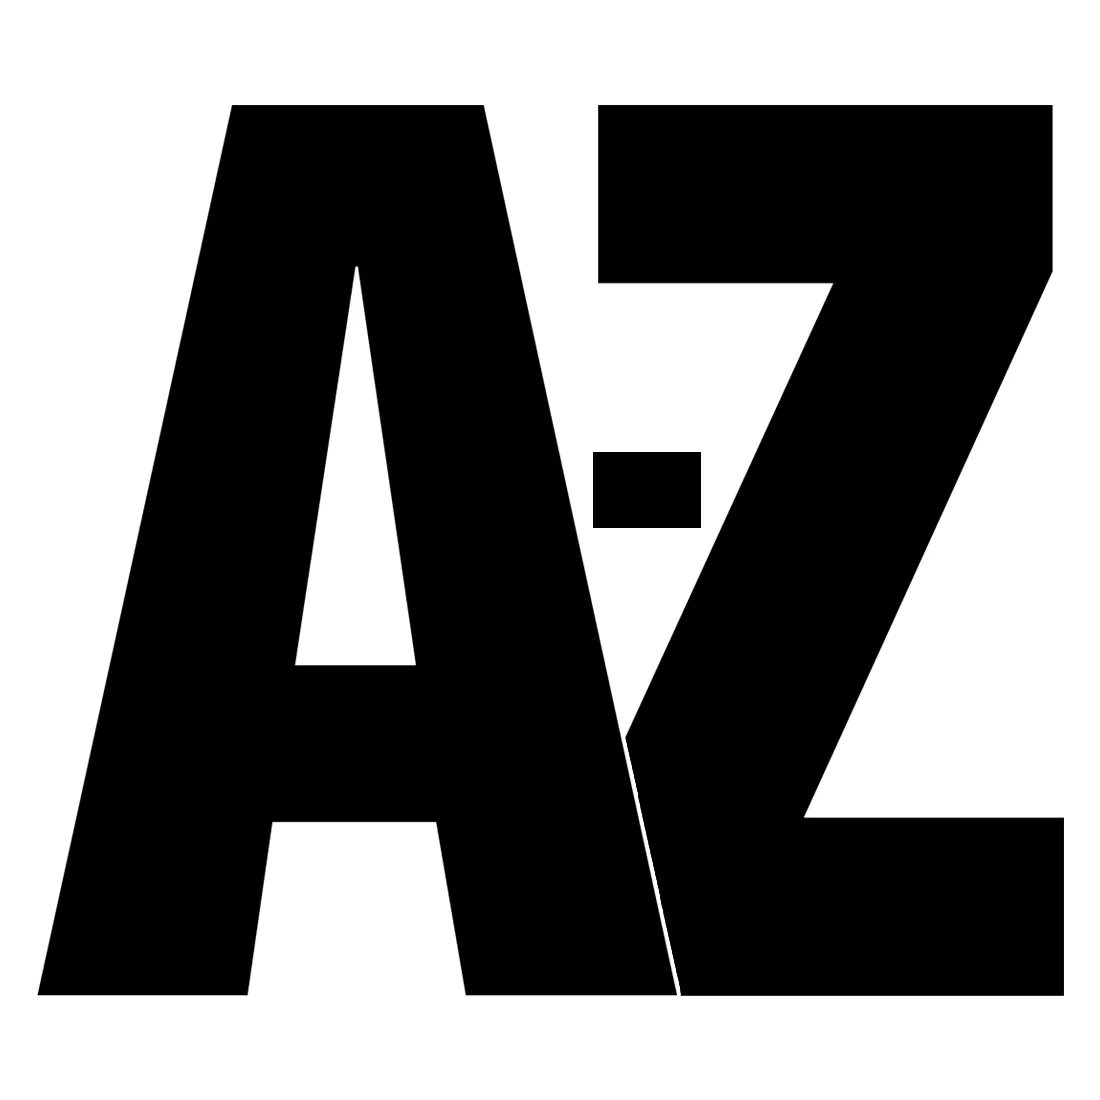 Big letter templates - A - Z